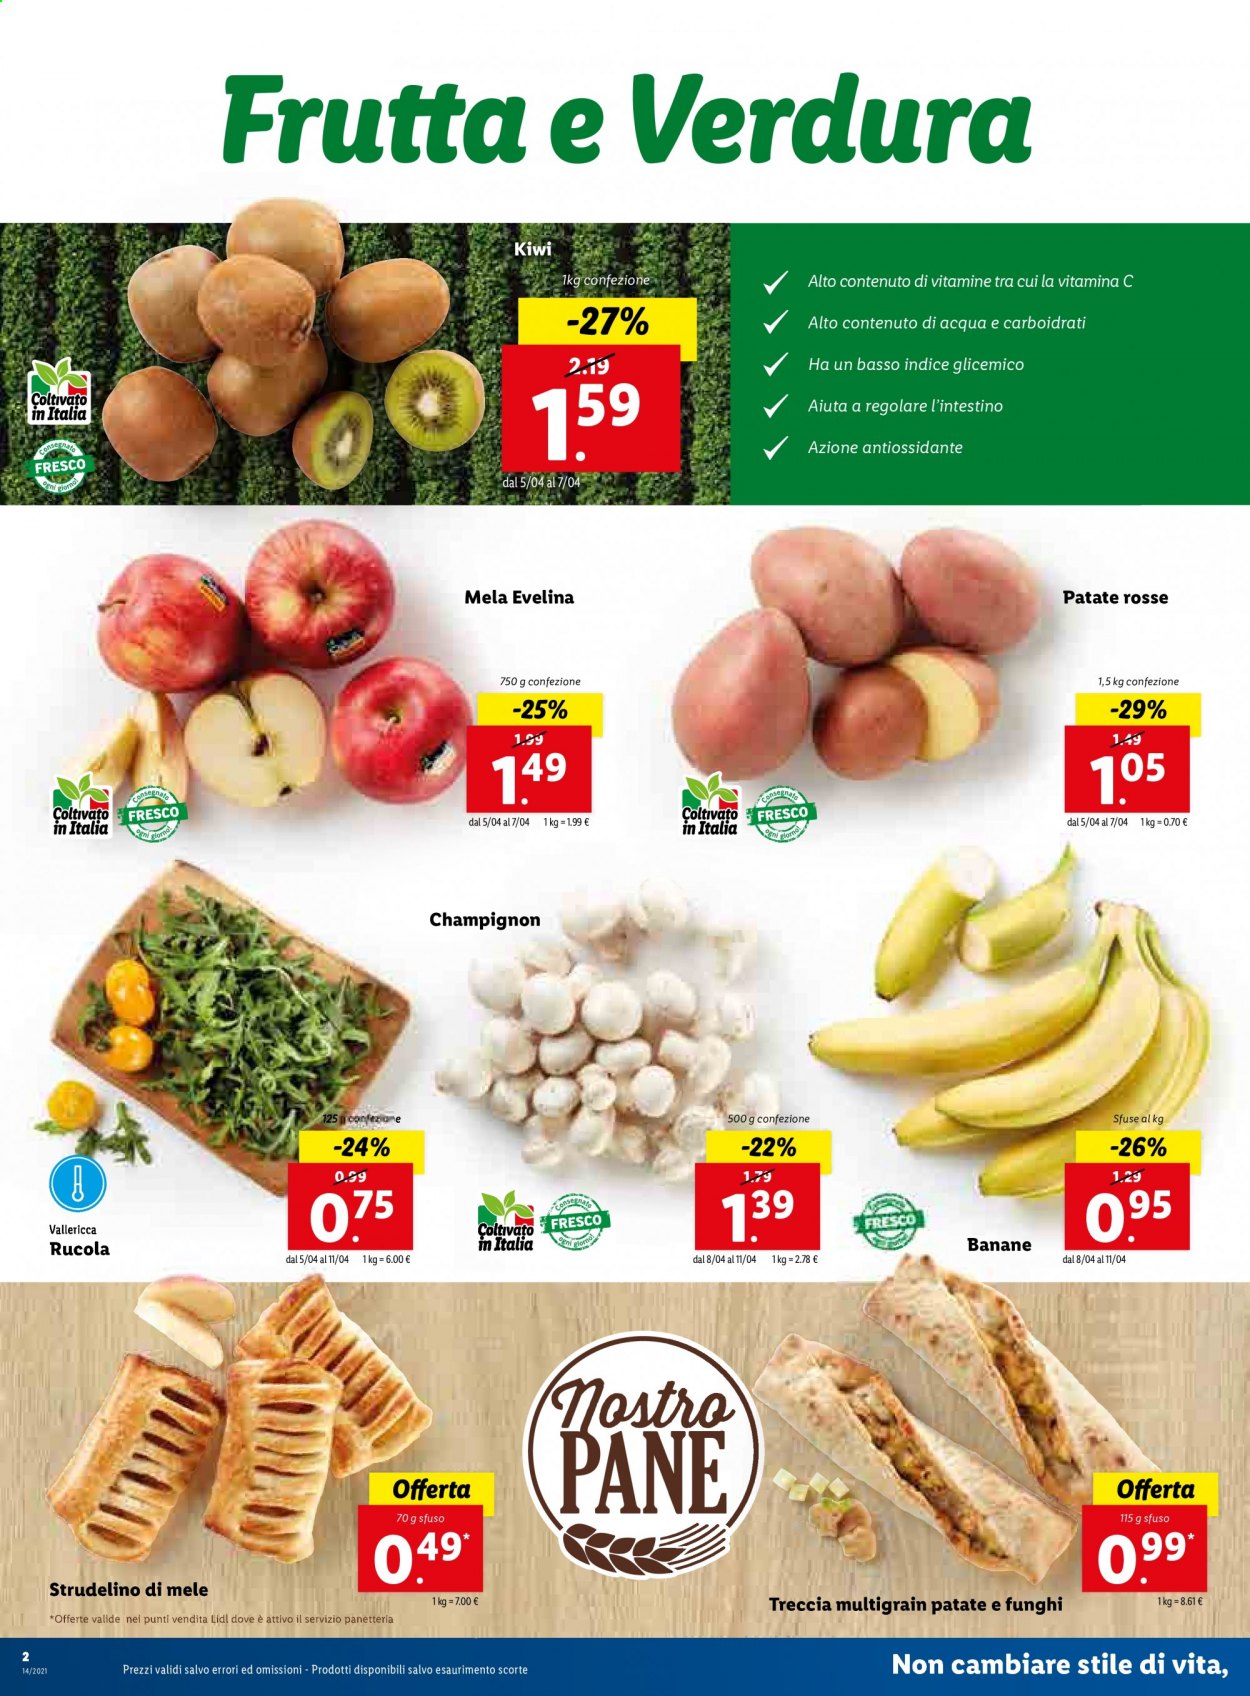 thumbnail - Volantino Lidl - 5/4/2021 - 11/4/2021 - Prodotti in offerta - funghi champignon, pane, rucola, patate rosse, banane, kiwi, treccia. Pagina 2.